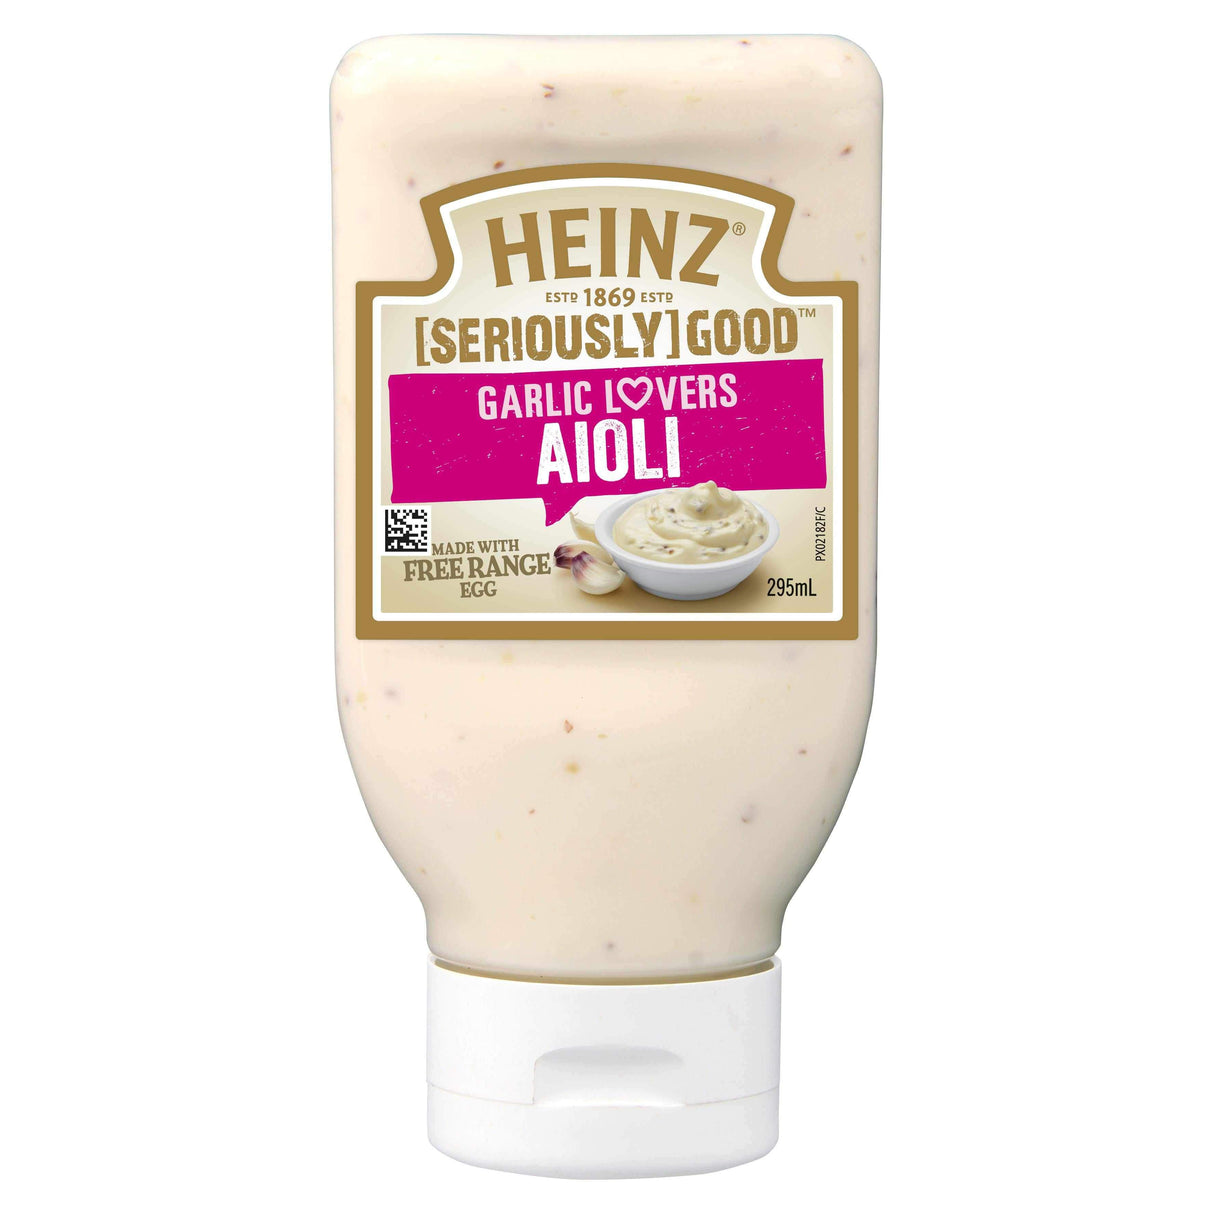 Heinz [SERIOUSLY] GOOD Garlic Lovers Aioli Mayonnaise 295ml